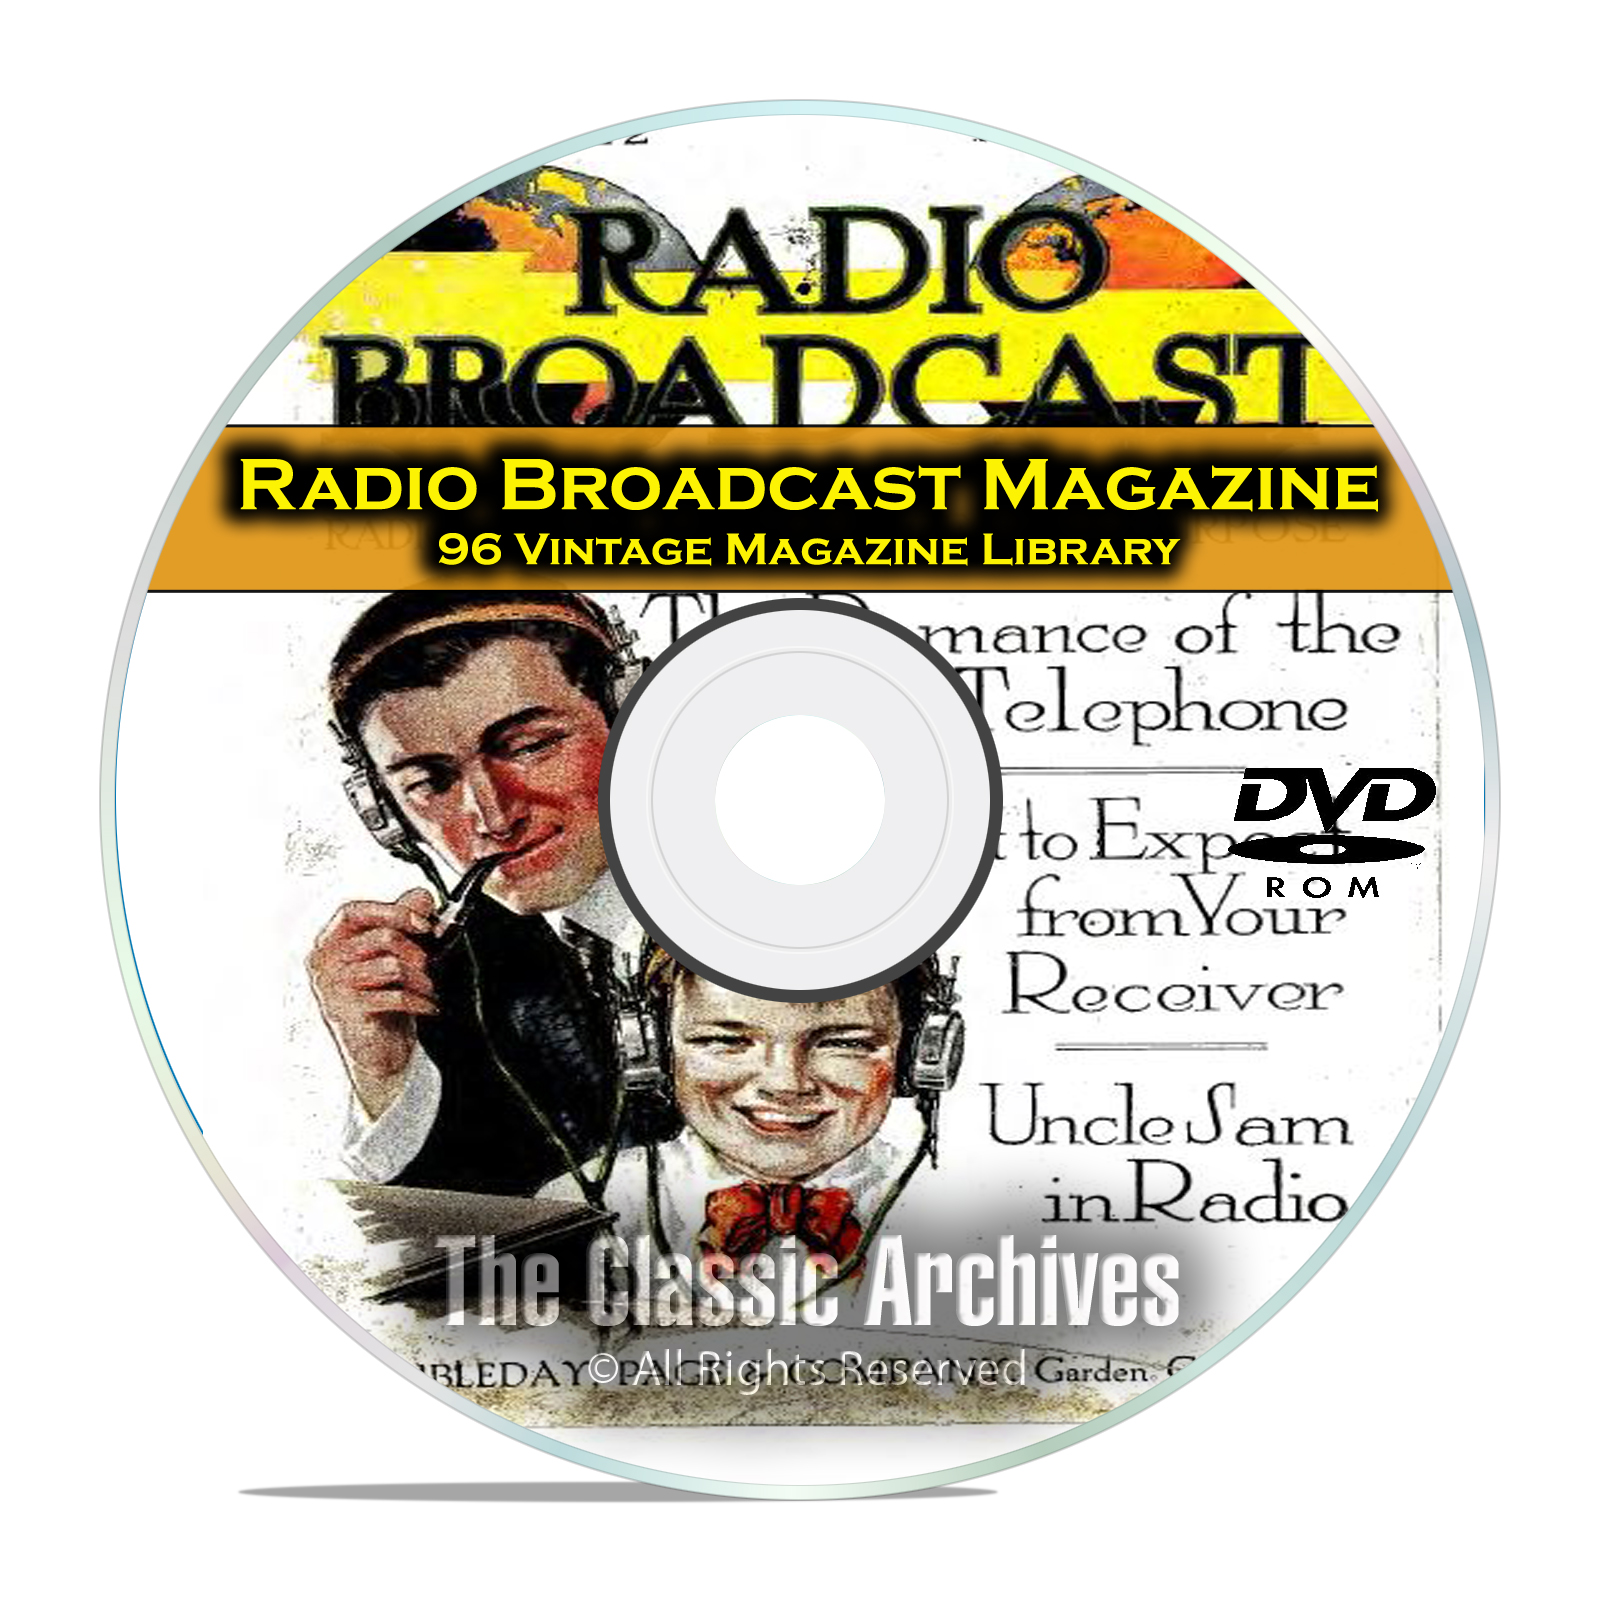 Radio Broadcast Magazine, 96 Vintage Old Time Radio Magazine Collection DVD